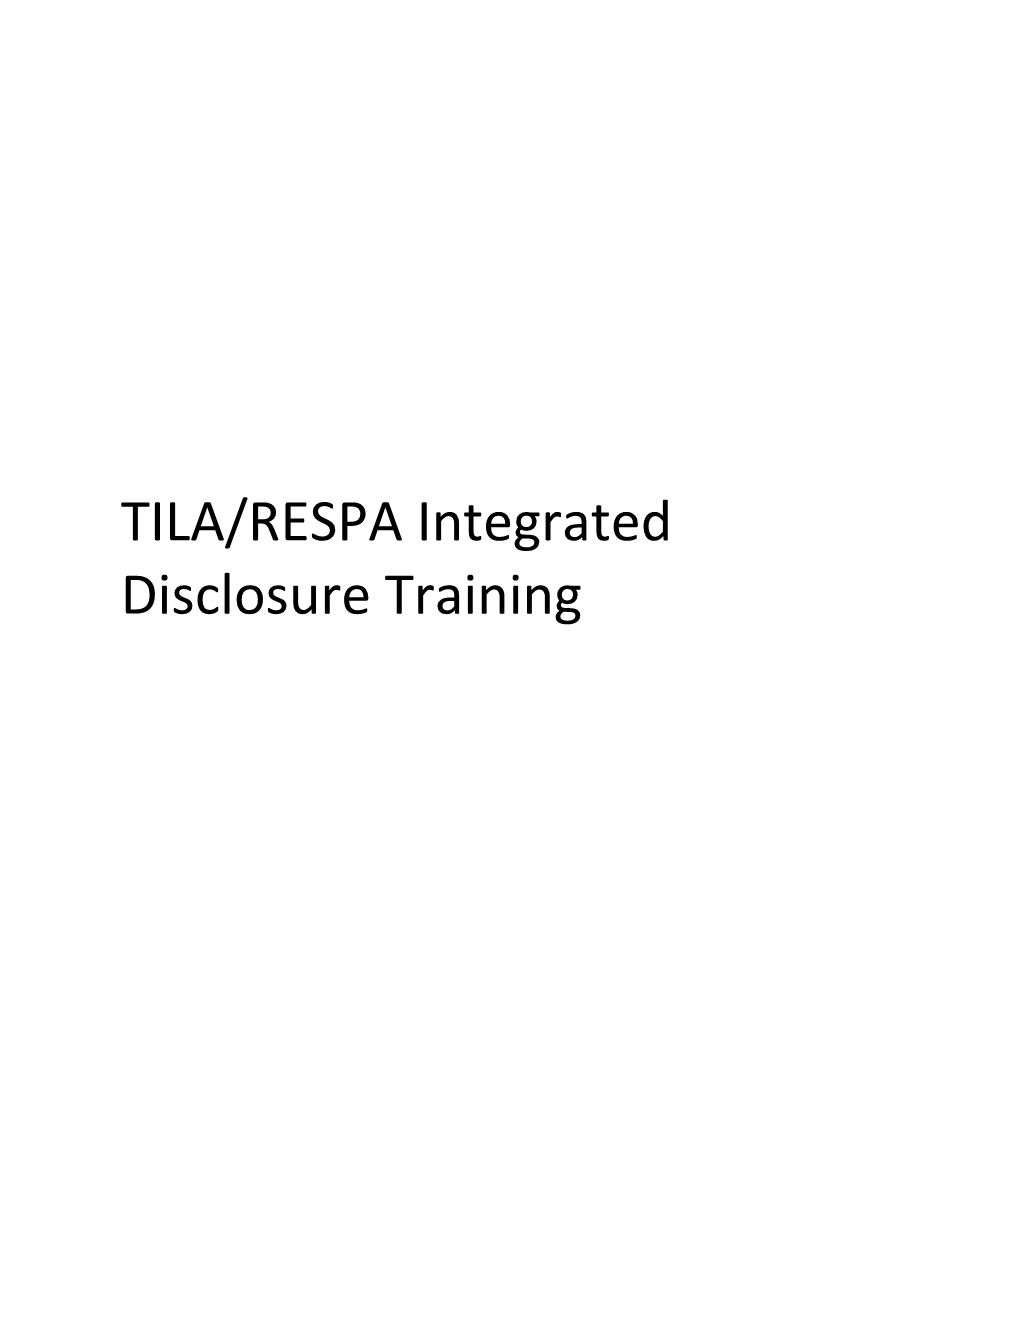 TILA/RESPA Integrated Disclosure Training